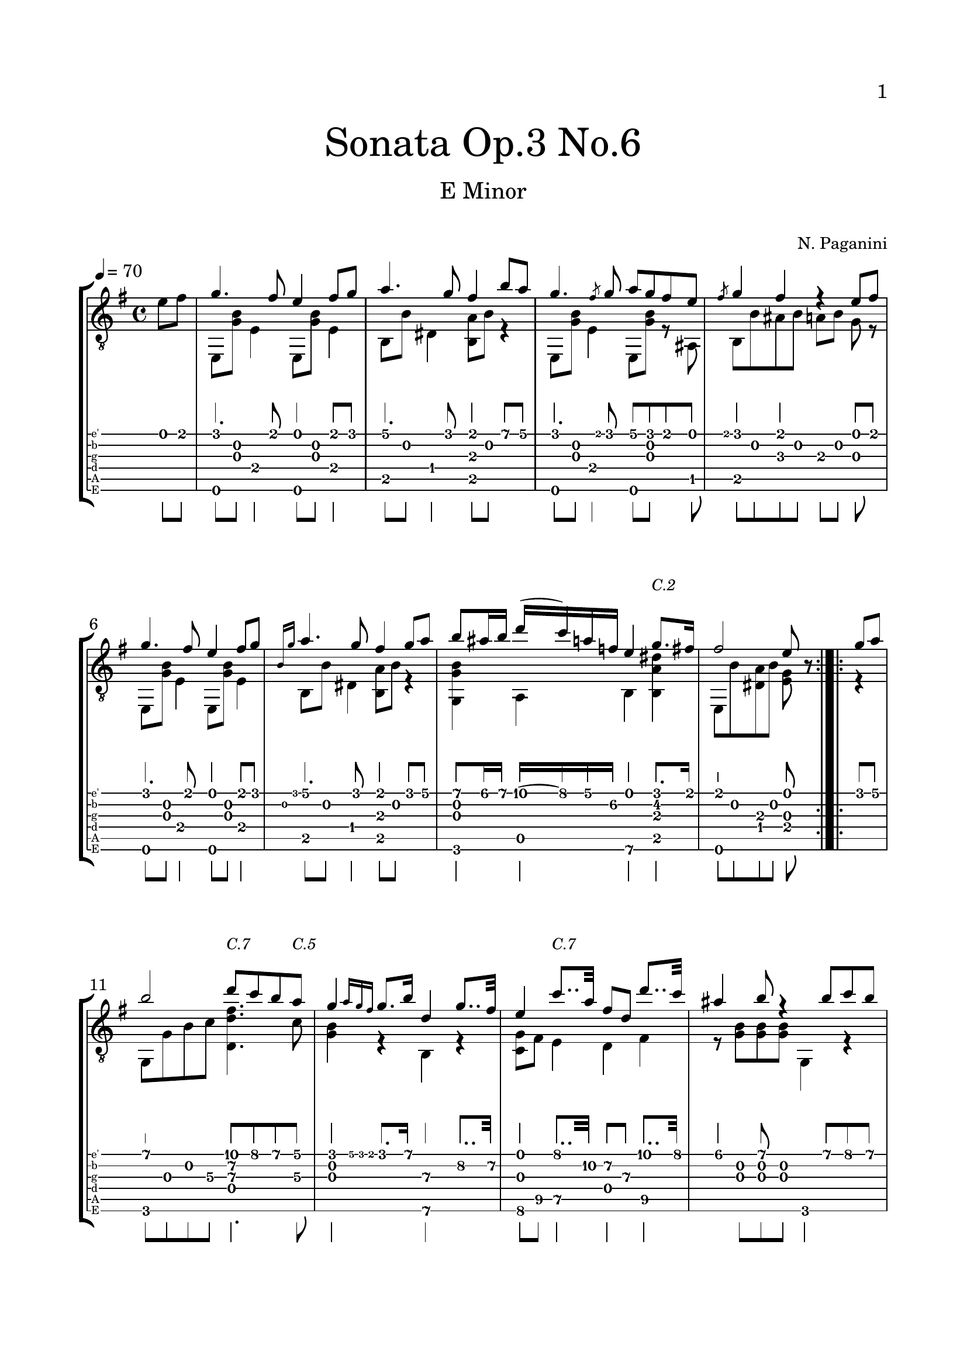 Niccolò Paganini - Sonata Op.3 No.6 (E Minor) by LemonTree